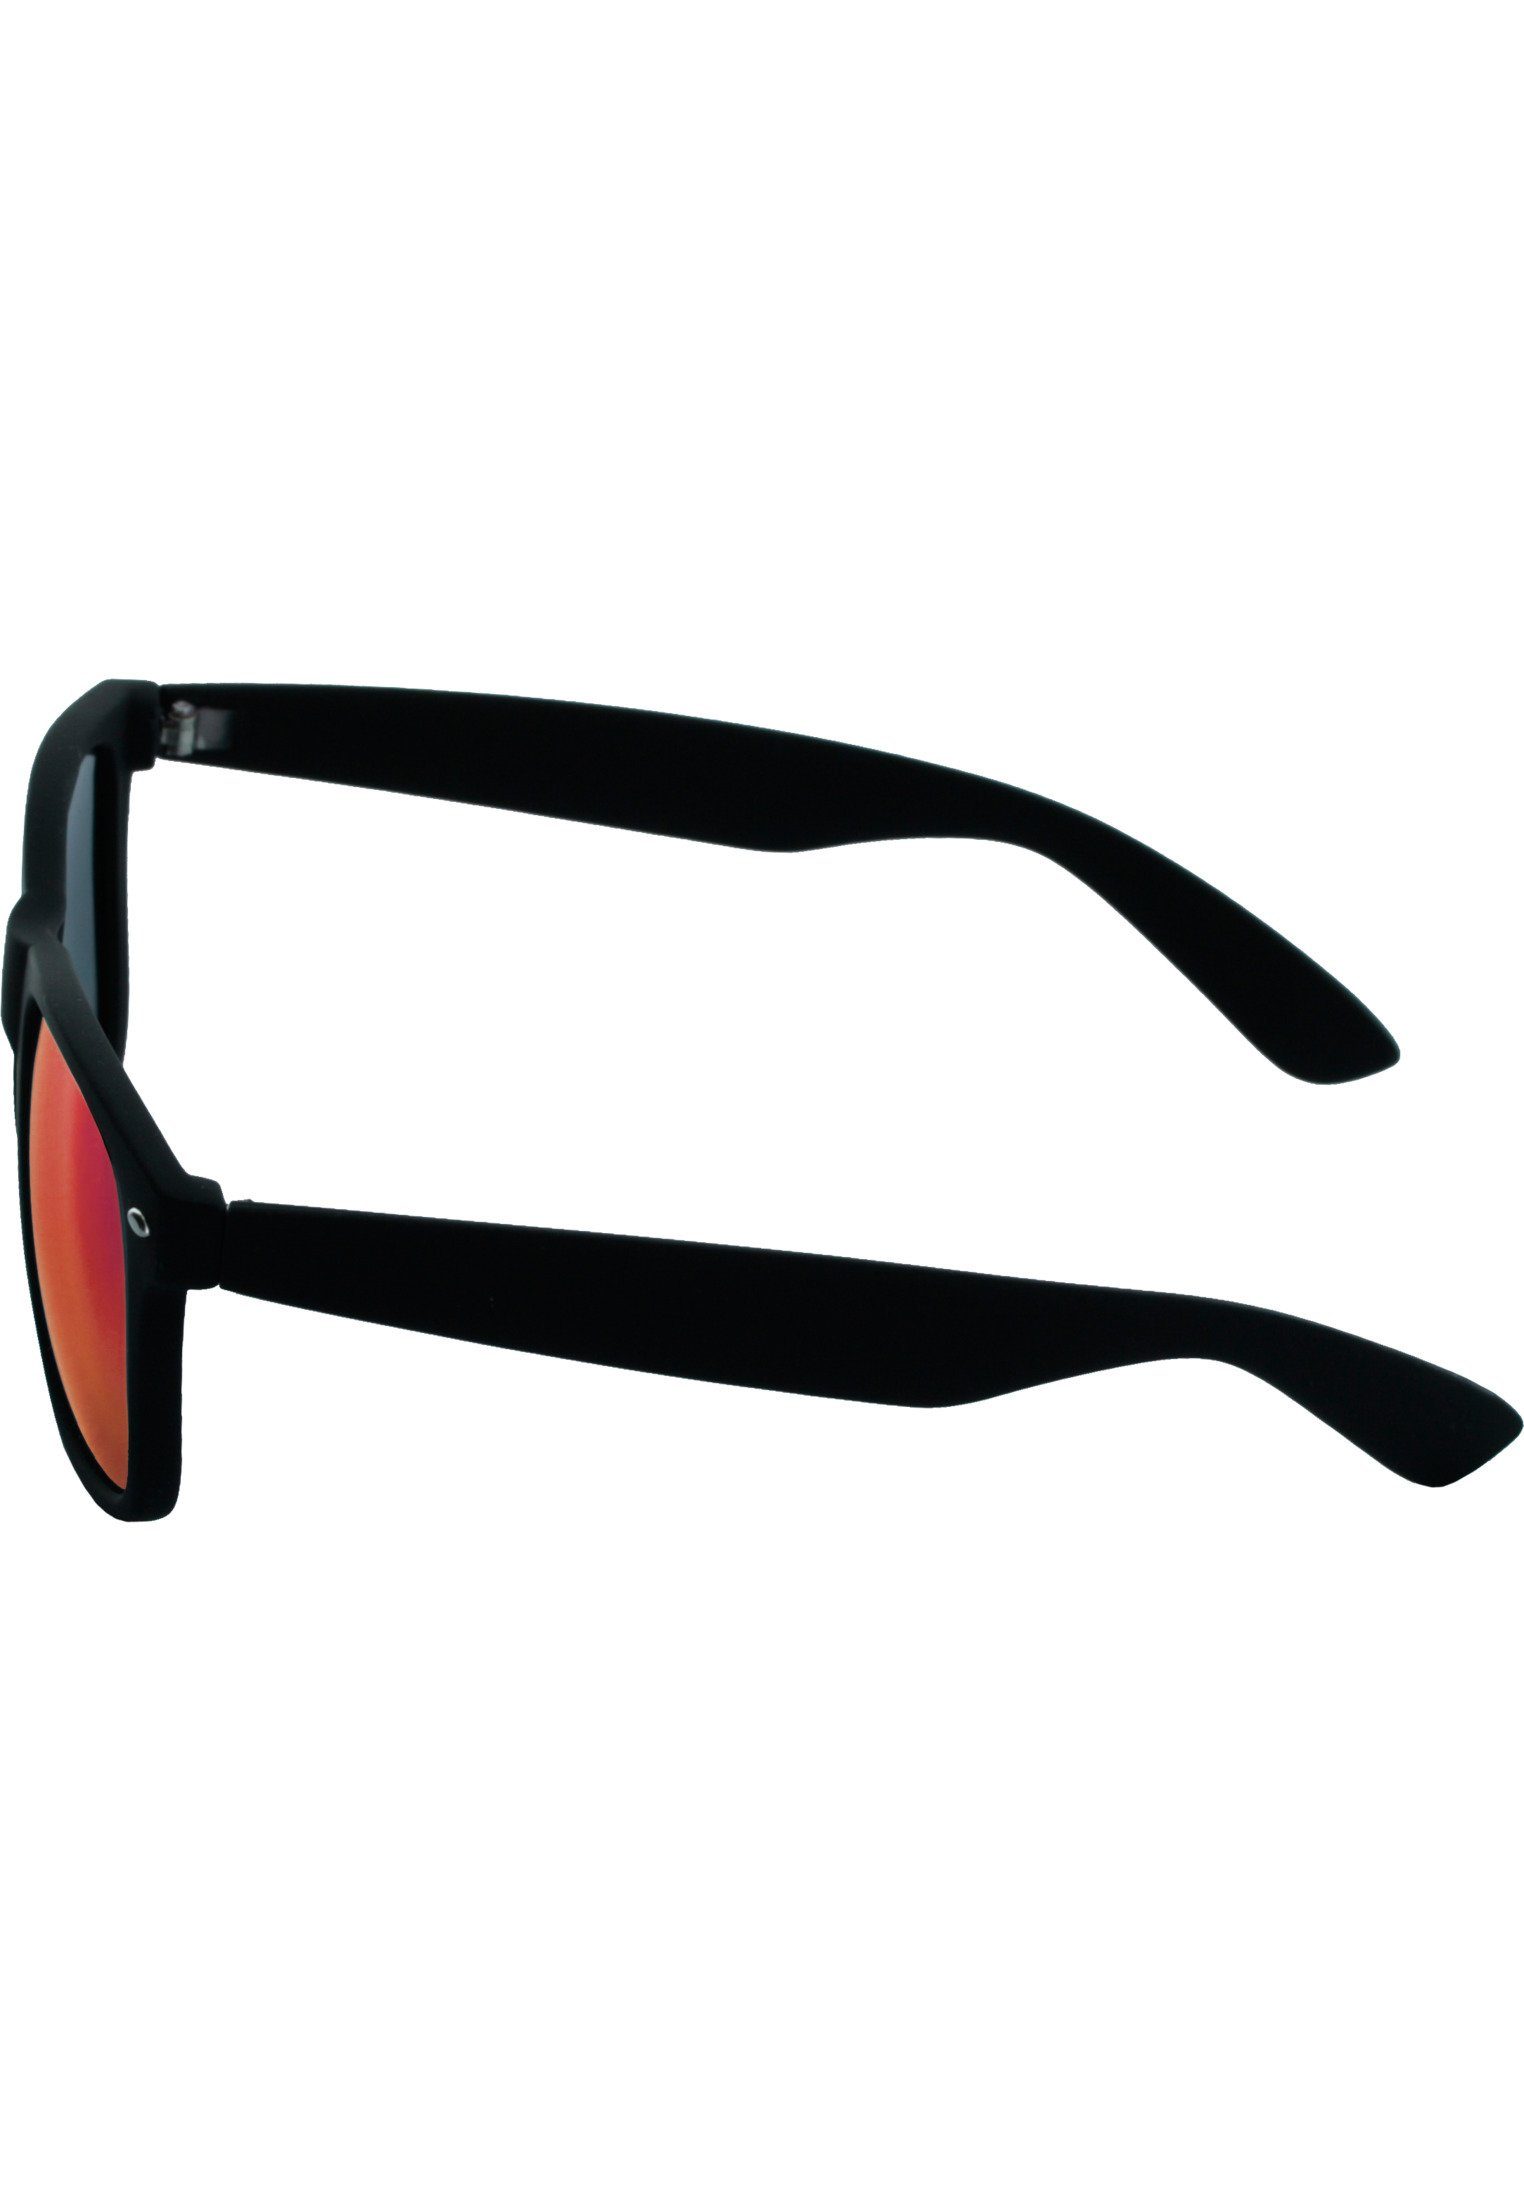 Likoma blk/red Sunglasses MSTRDS Accessoires Mirror Sonnenbrille